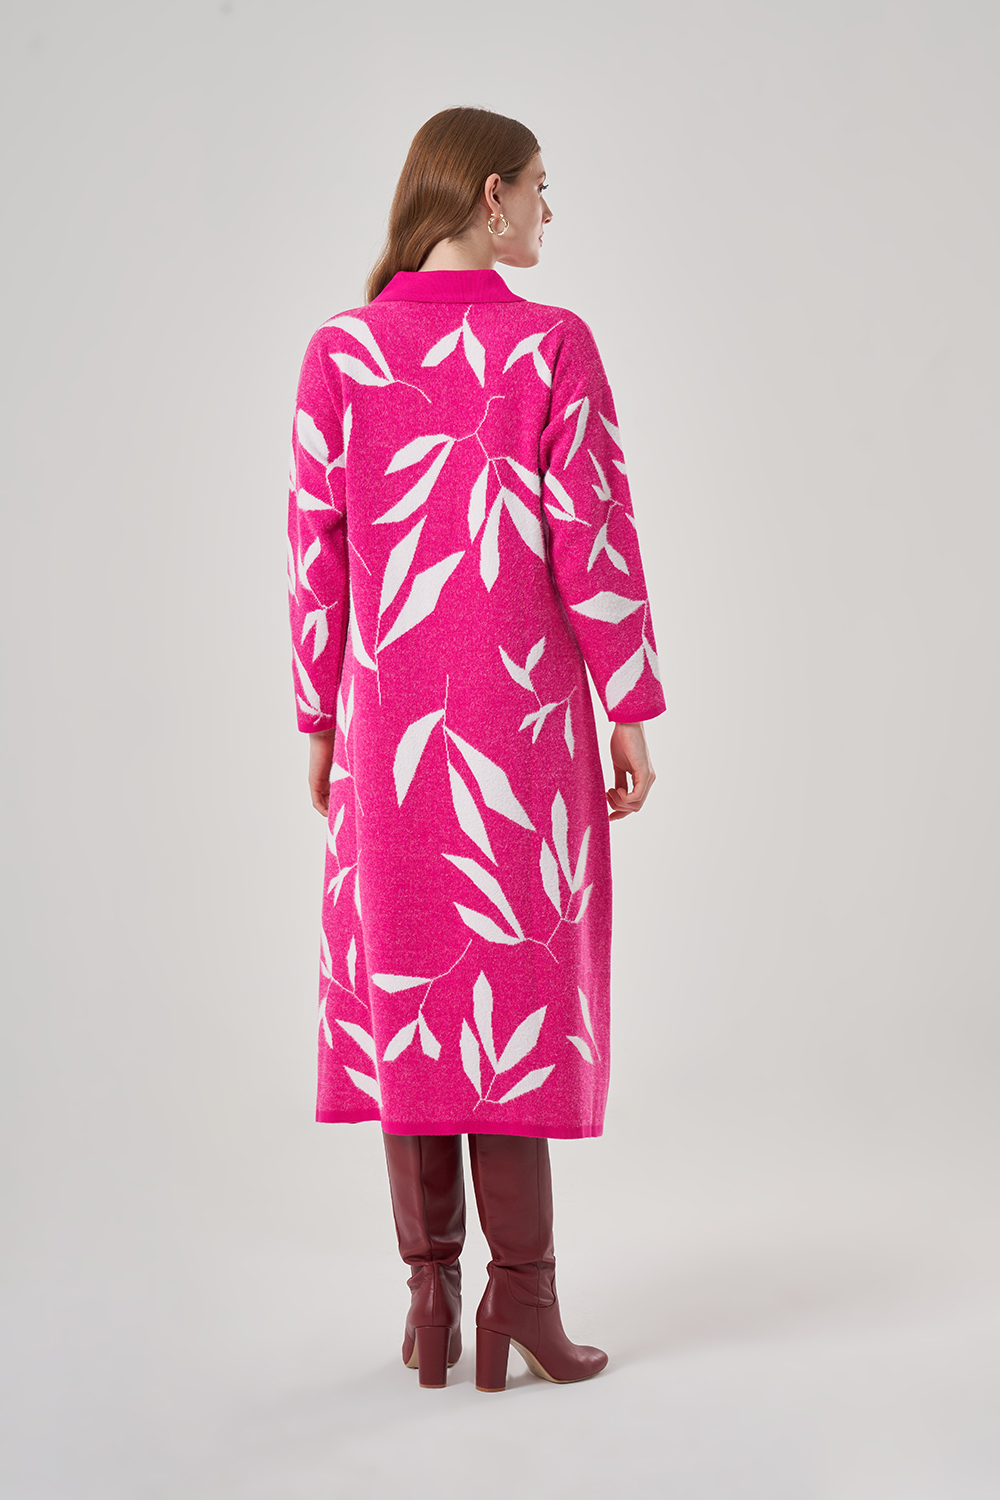 Special Patterned Soft Fuchsia Knitwear Dress